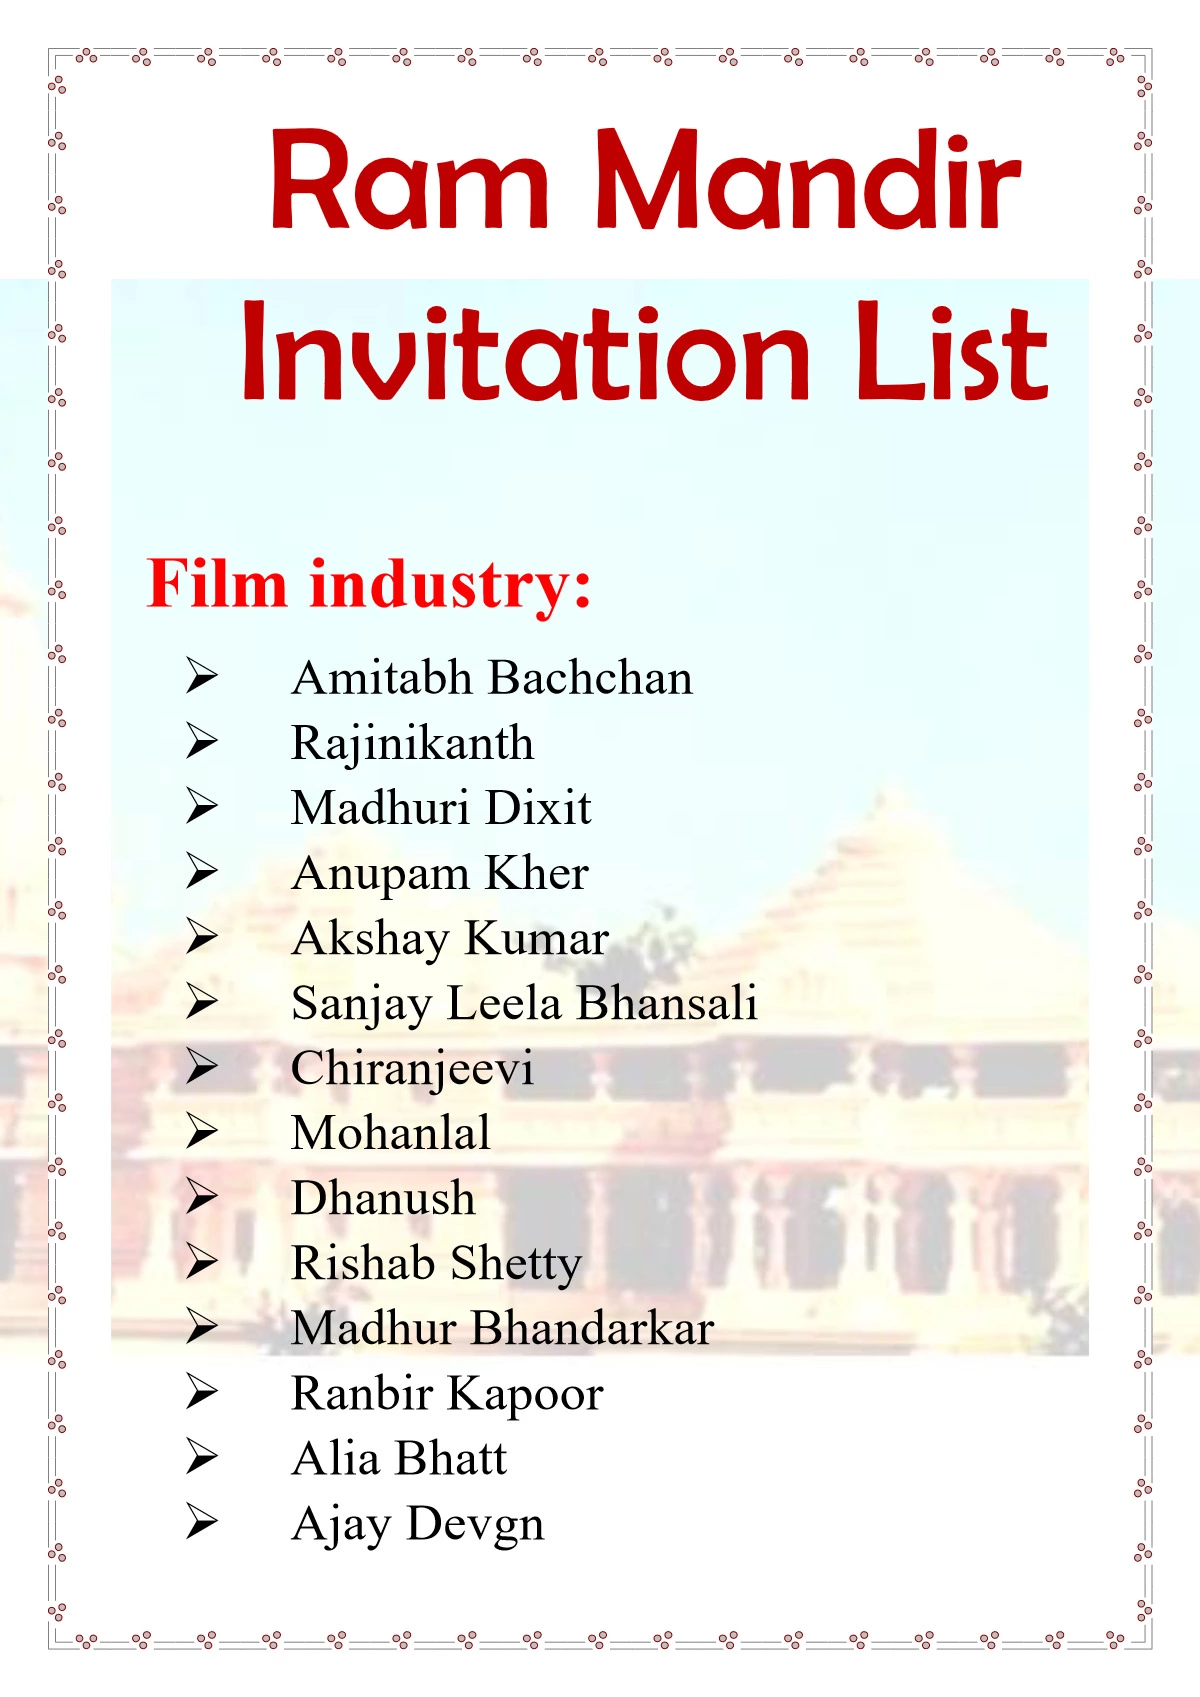 Ram mandir Invitation List